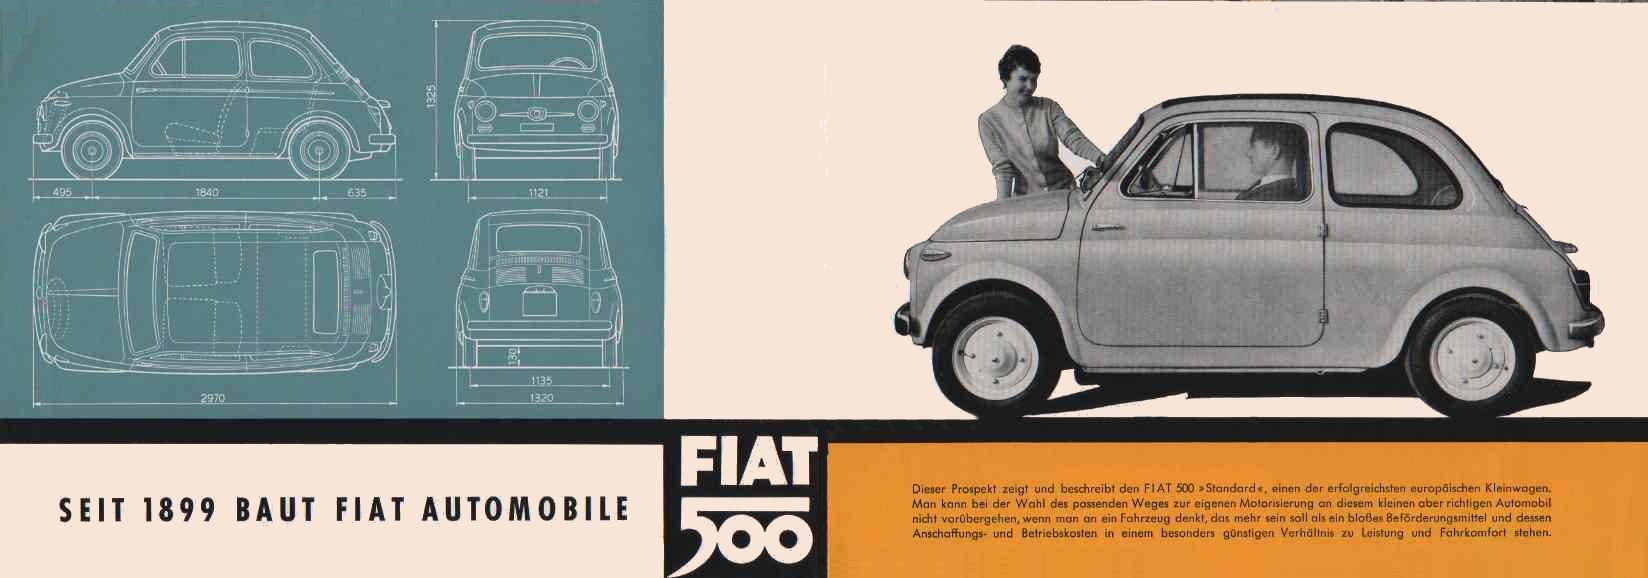 1955 Fiat 500 Brochure